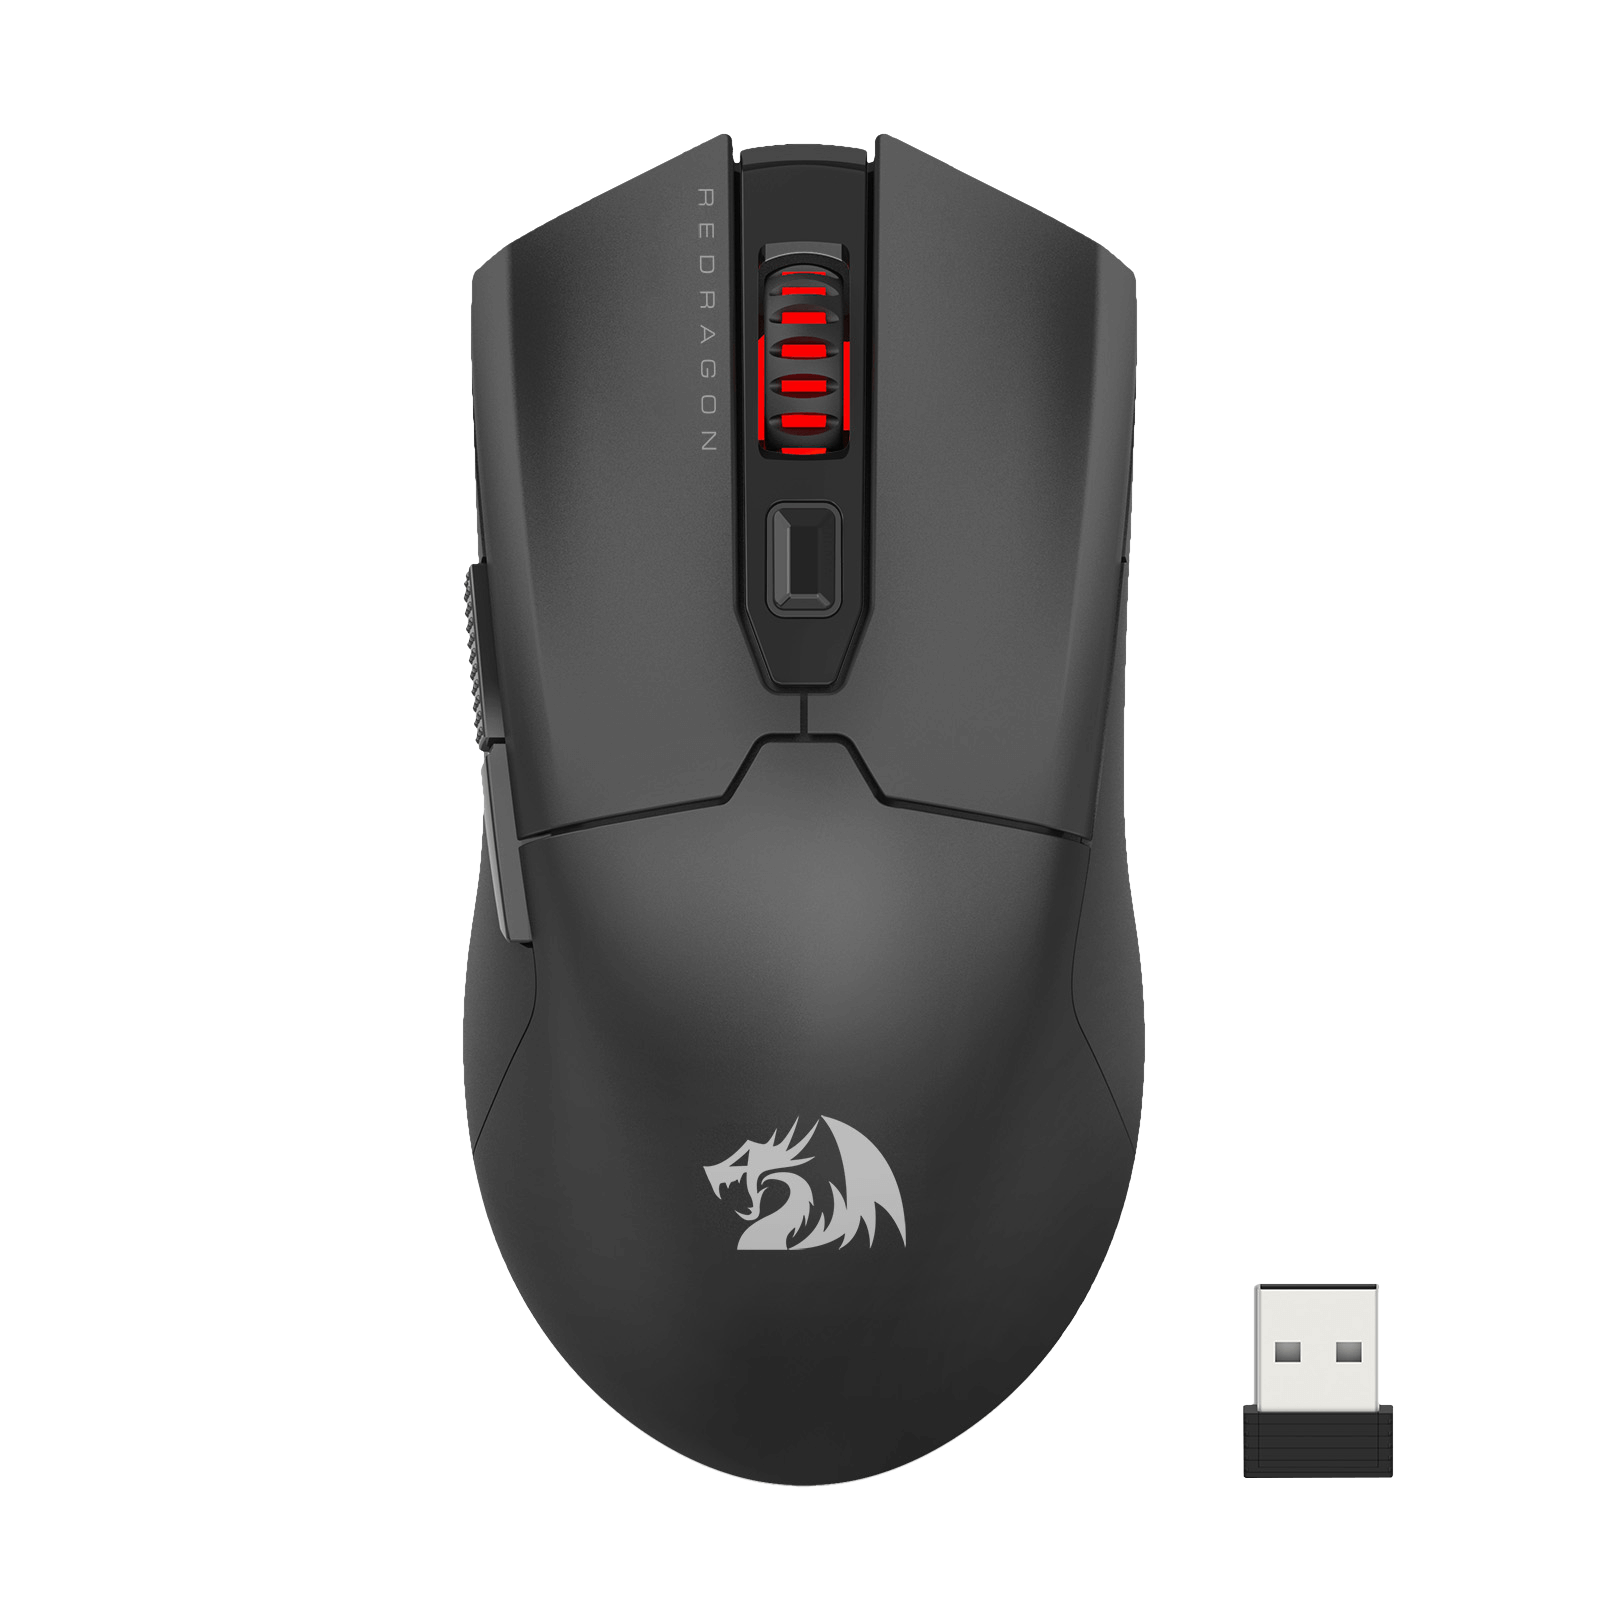 Mouse Redragon FYZU M995 - Albagame